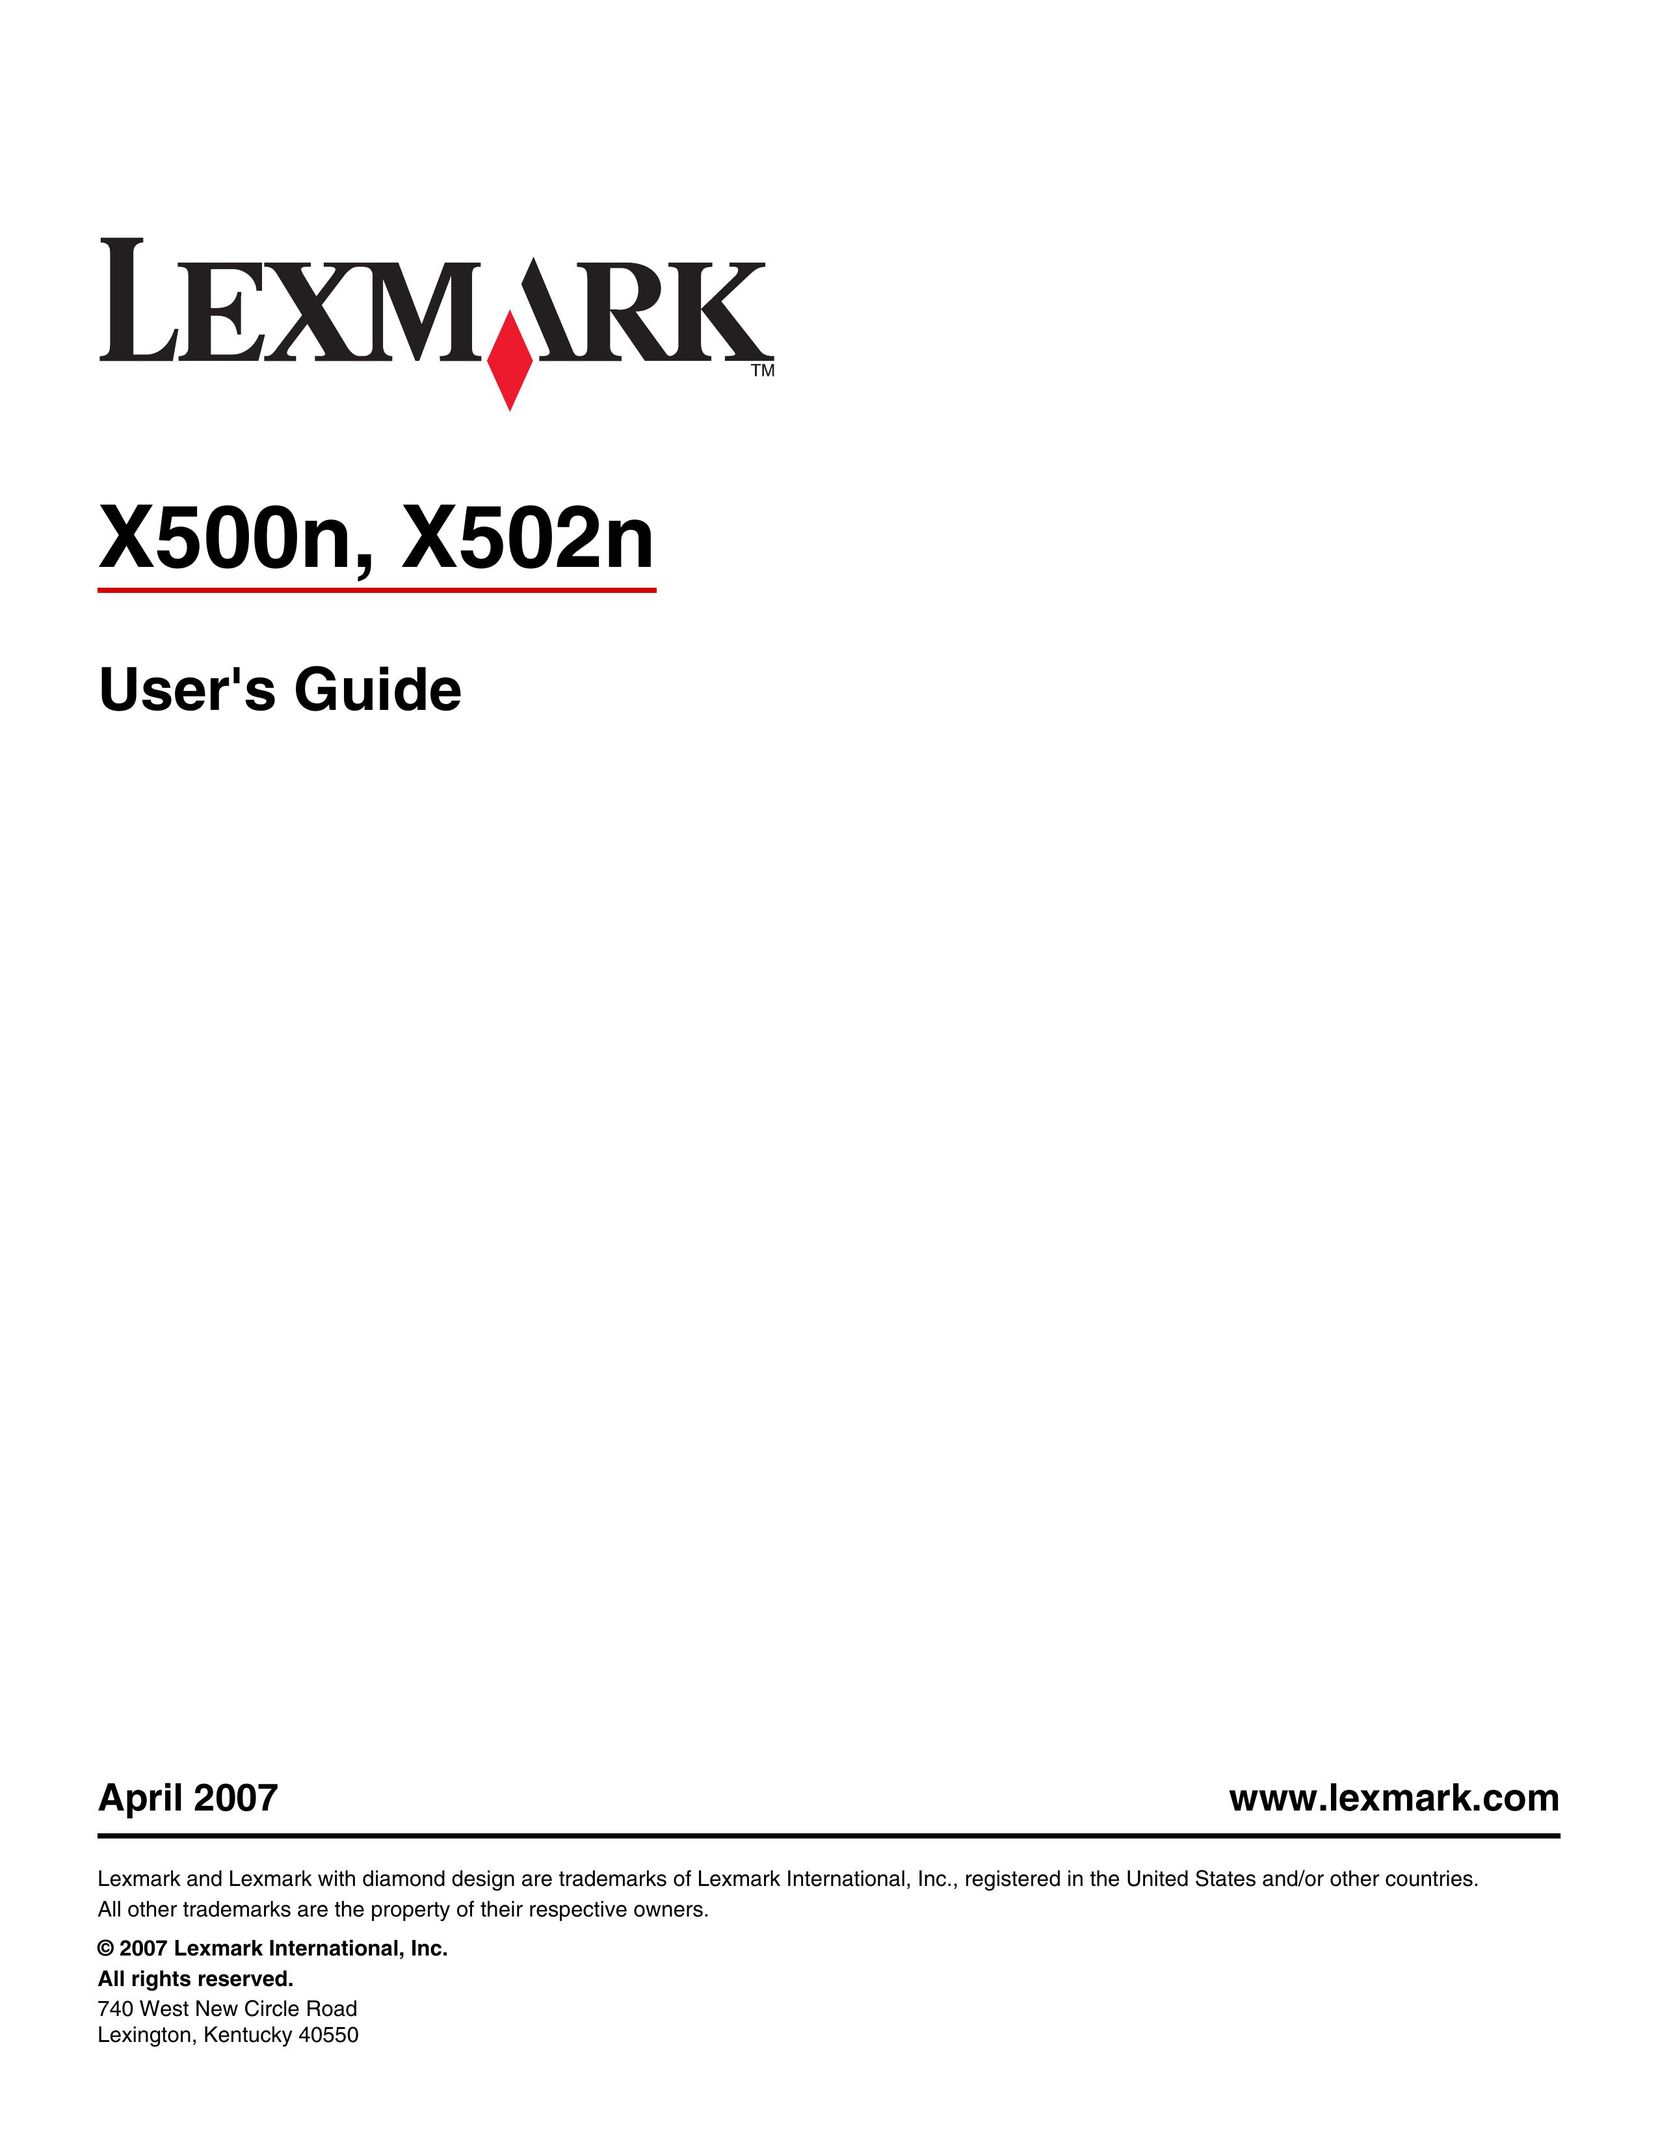 Lexmark X502N Computer Monitor User Manual